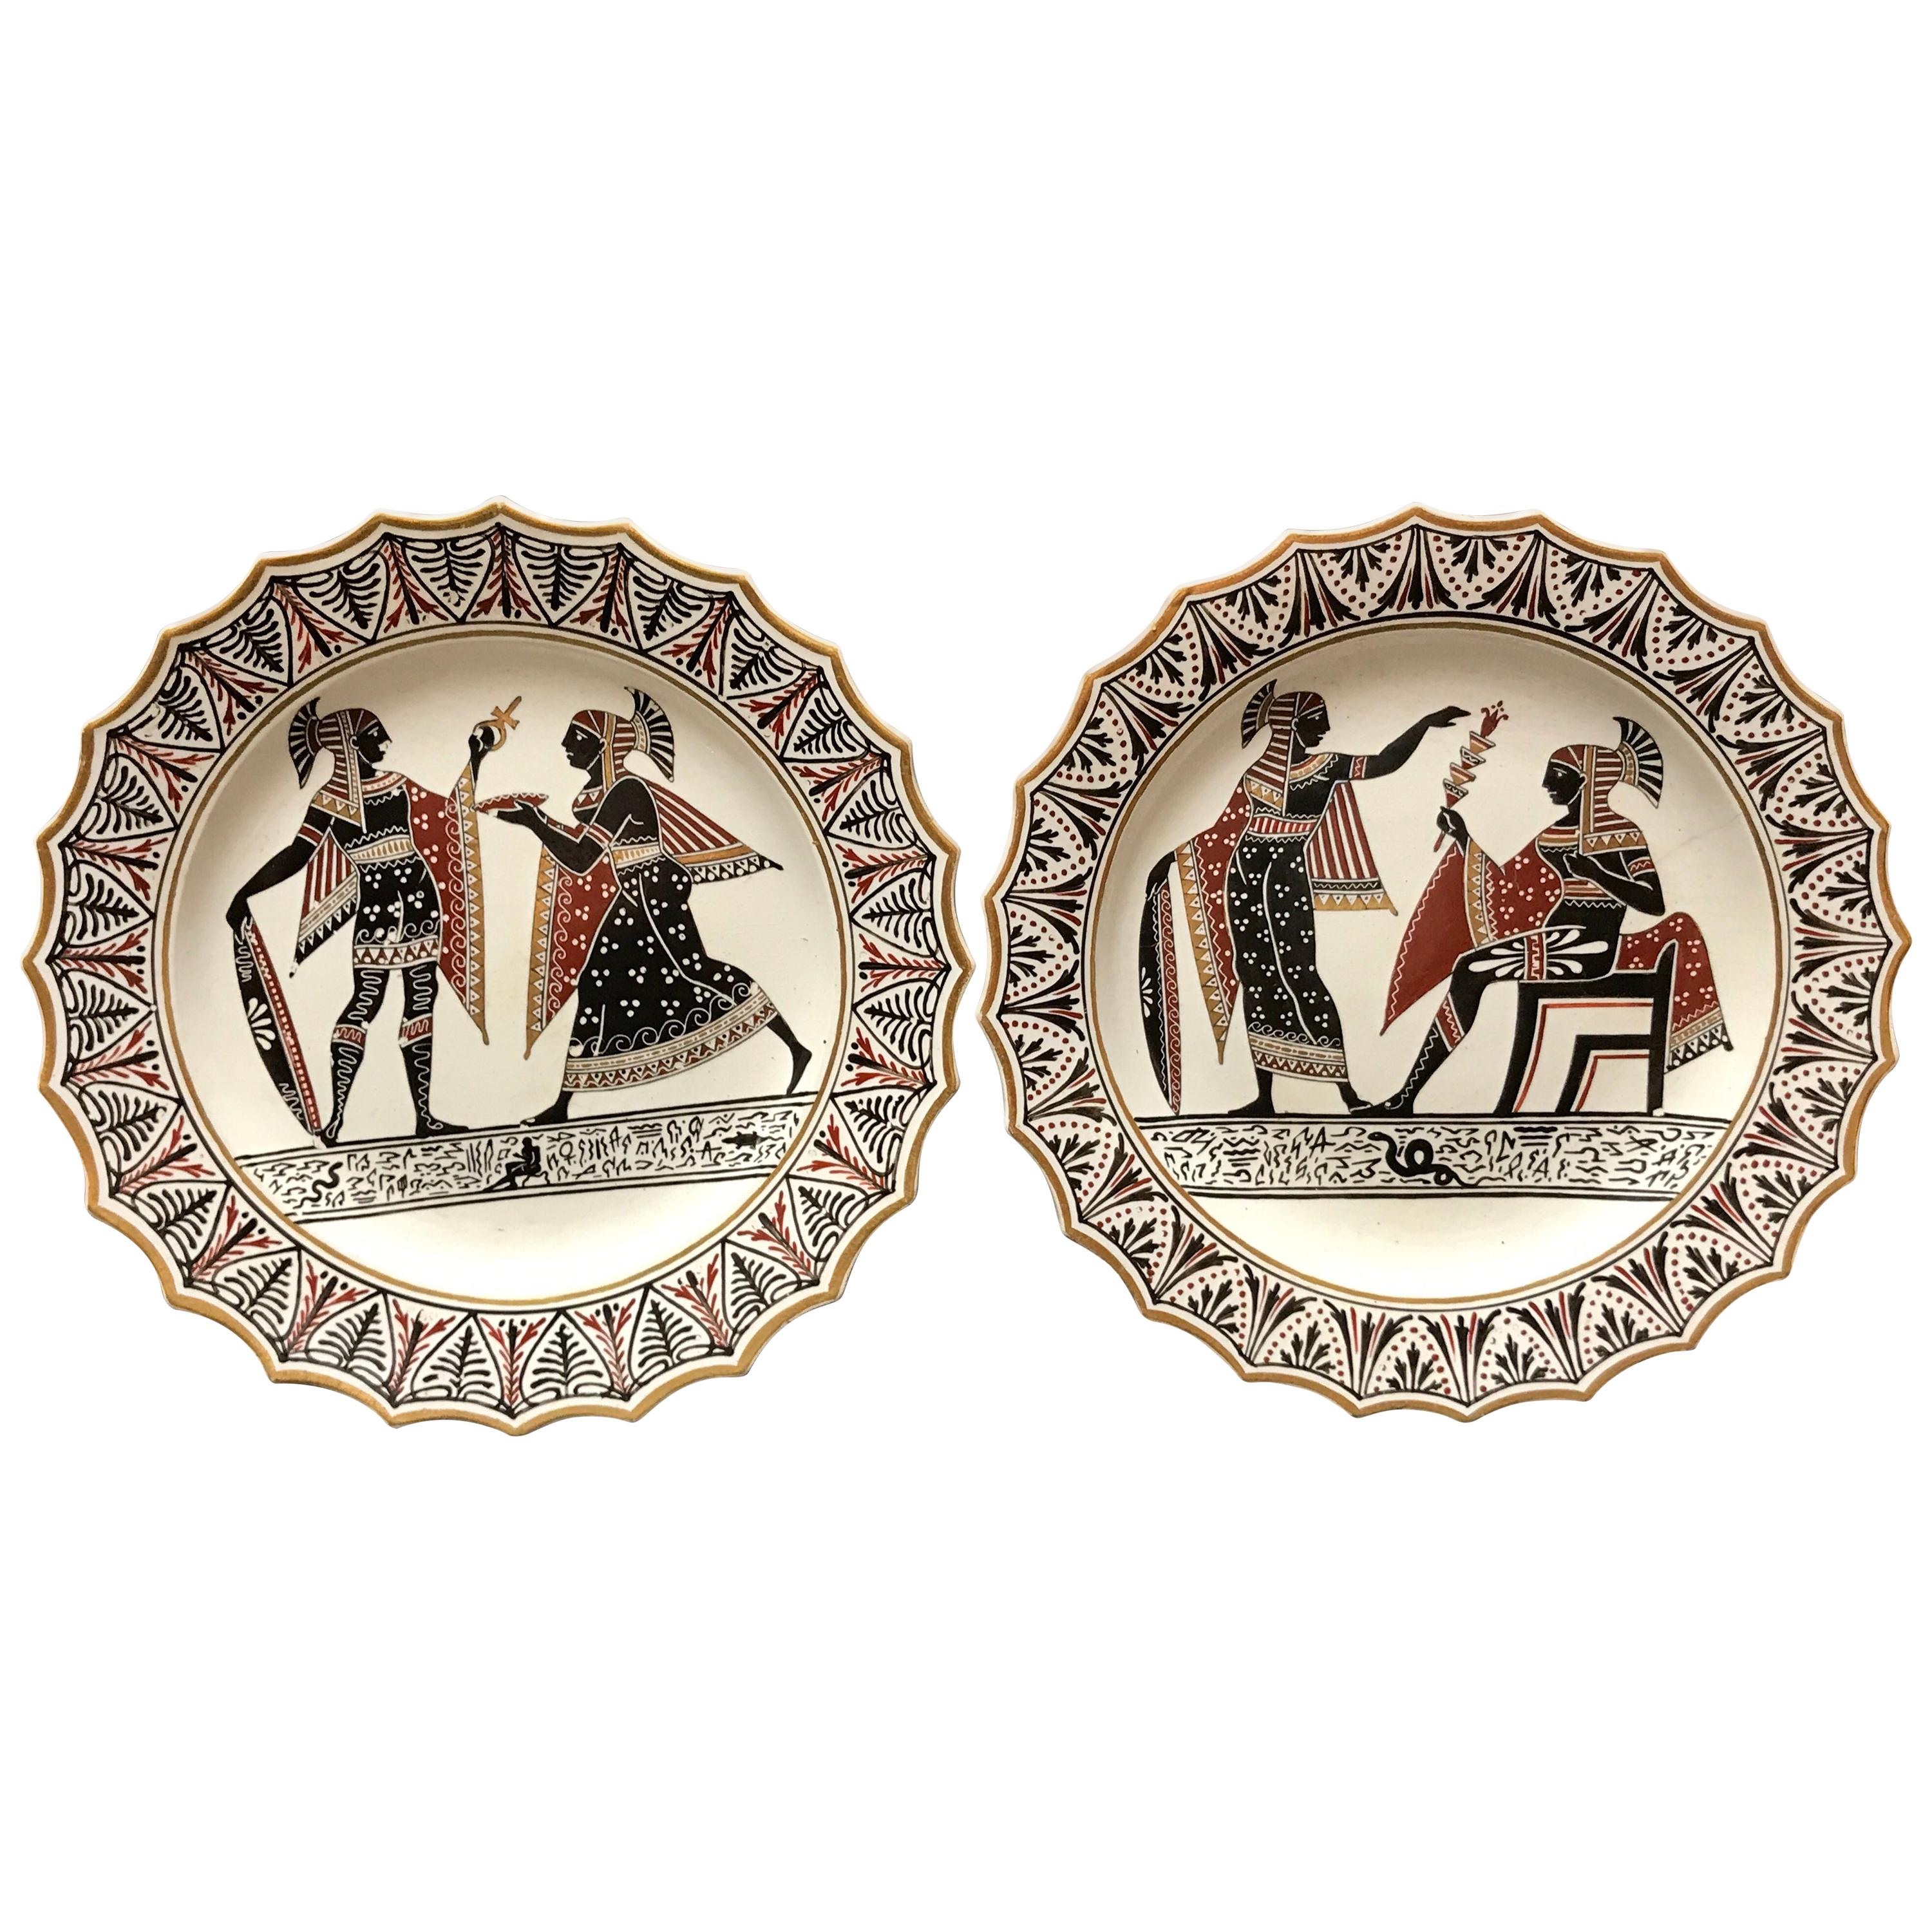 Pair of Giustiniani Egyptomania Pottery Plates with Gilt Borders